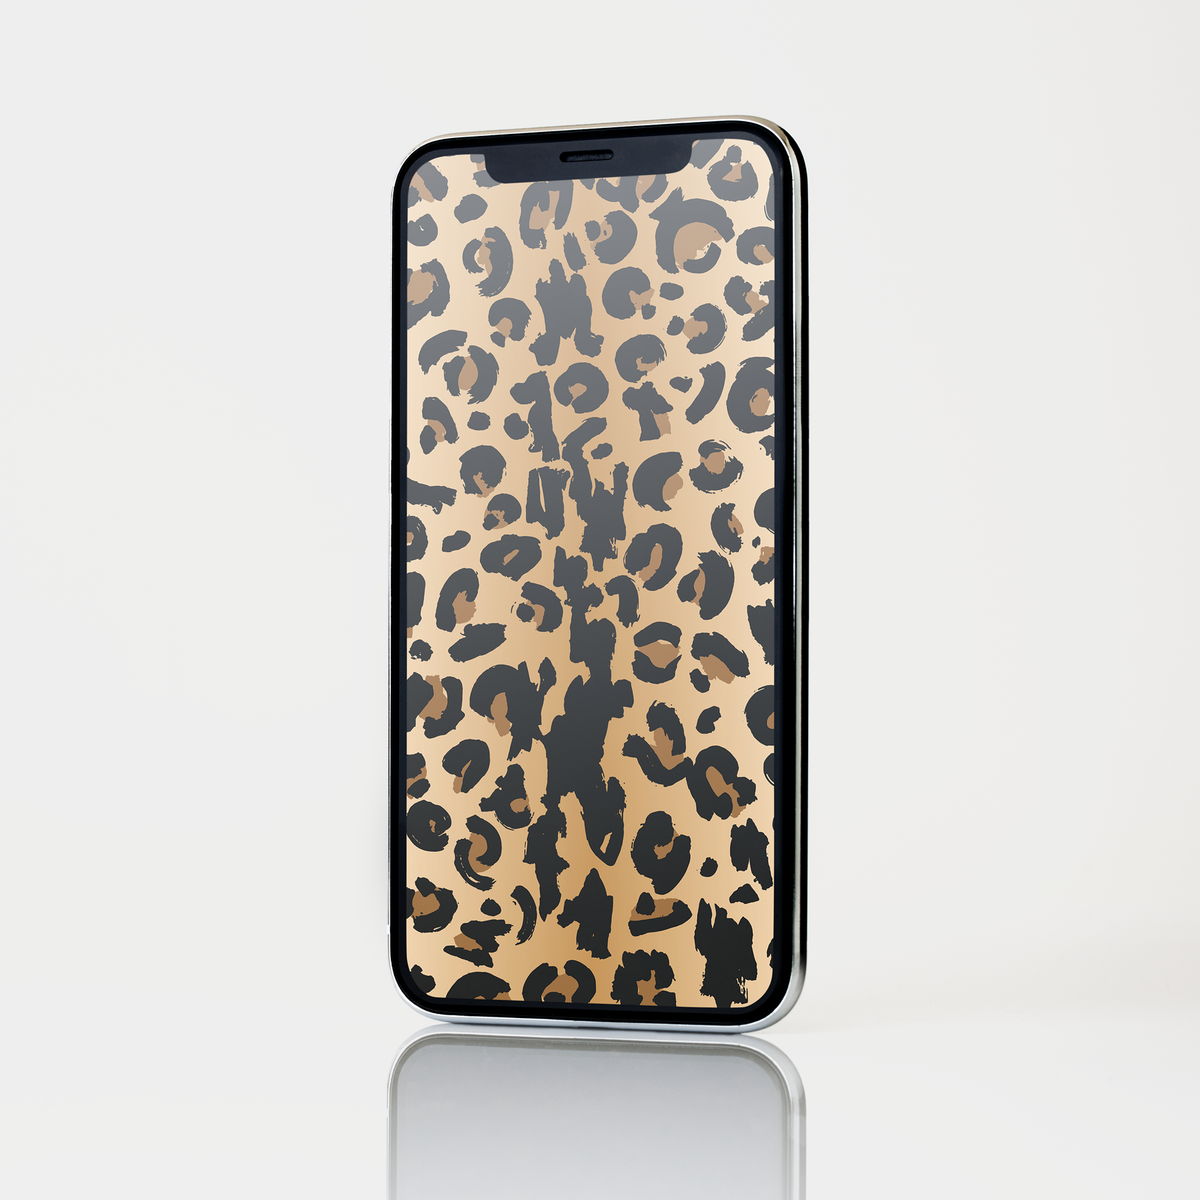 Butan | Leopard Print | Mobile Wallpaper